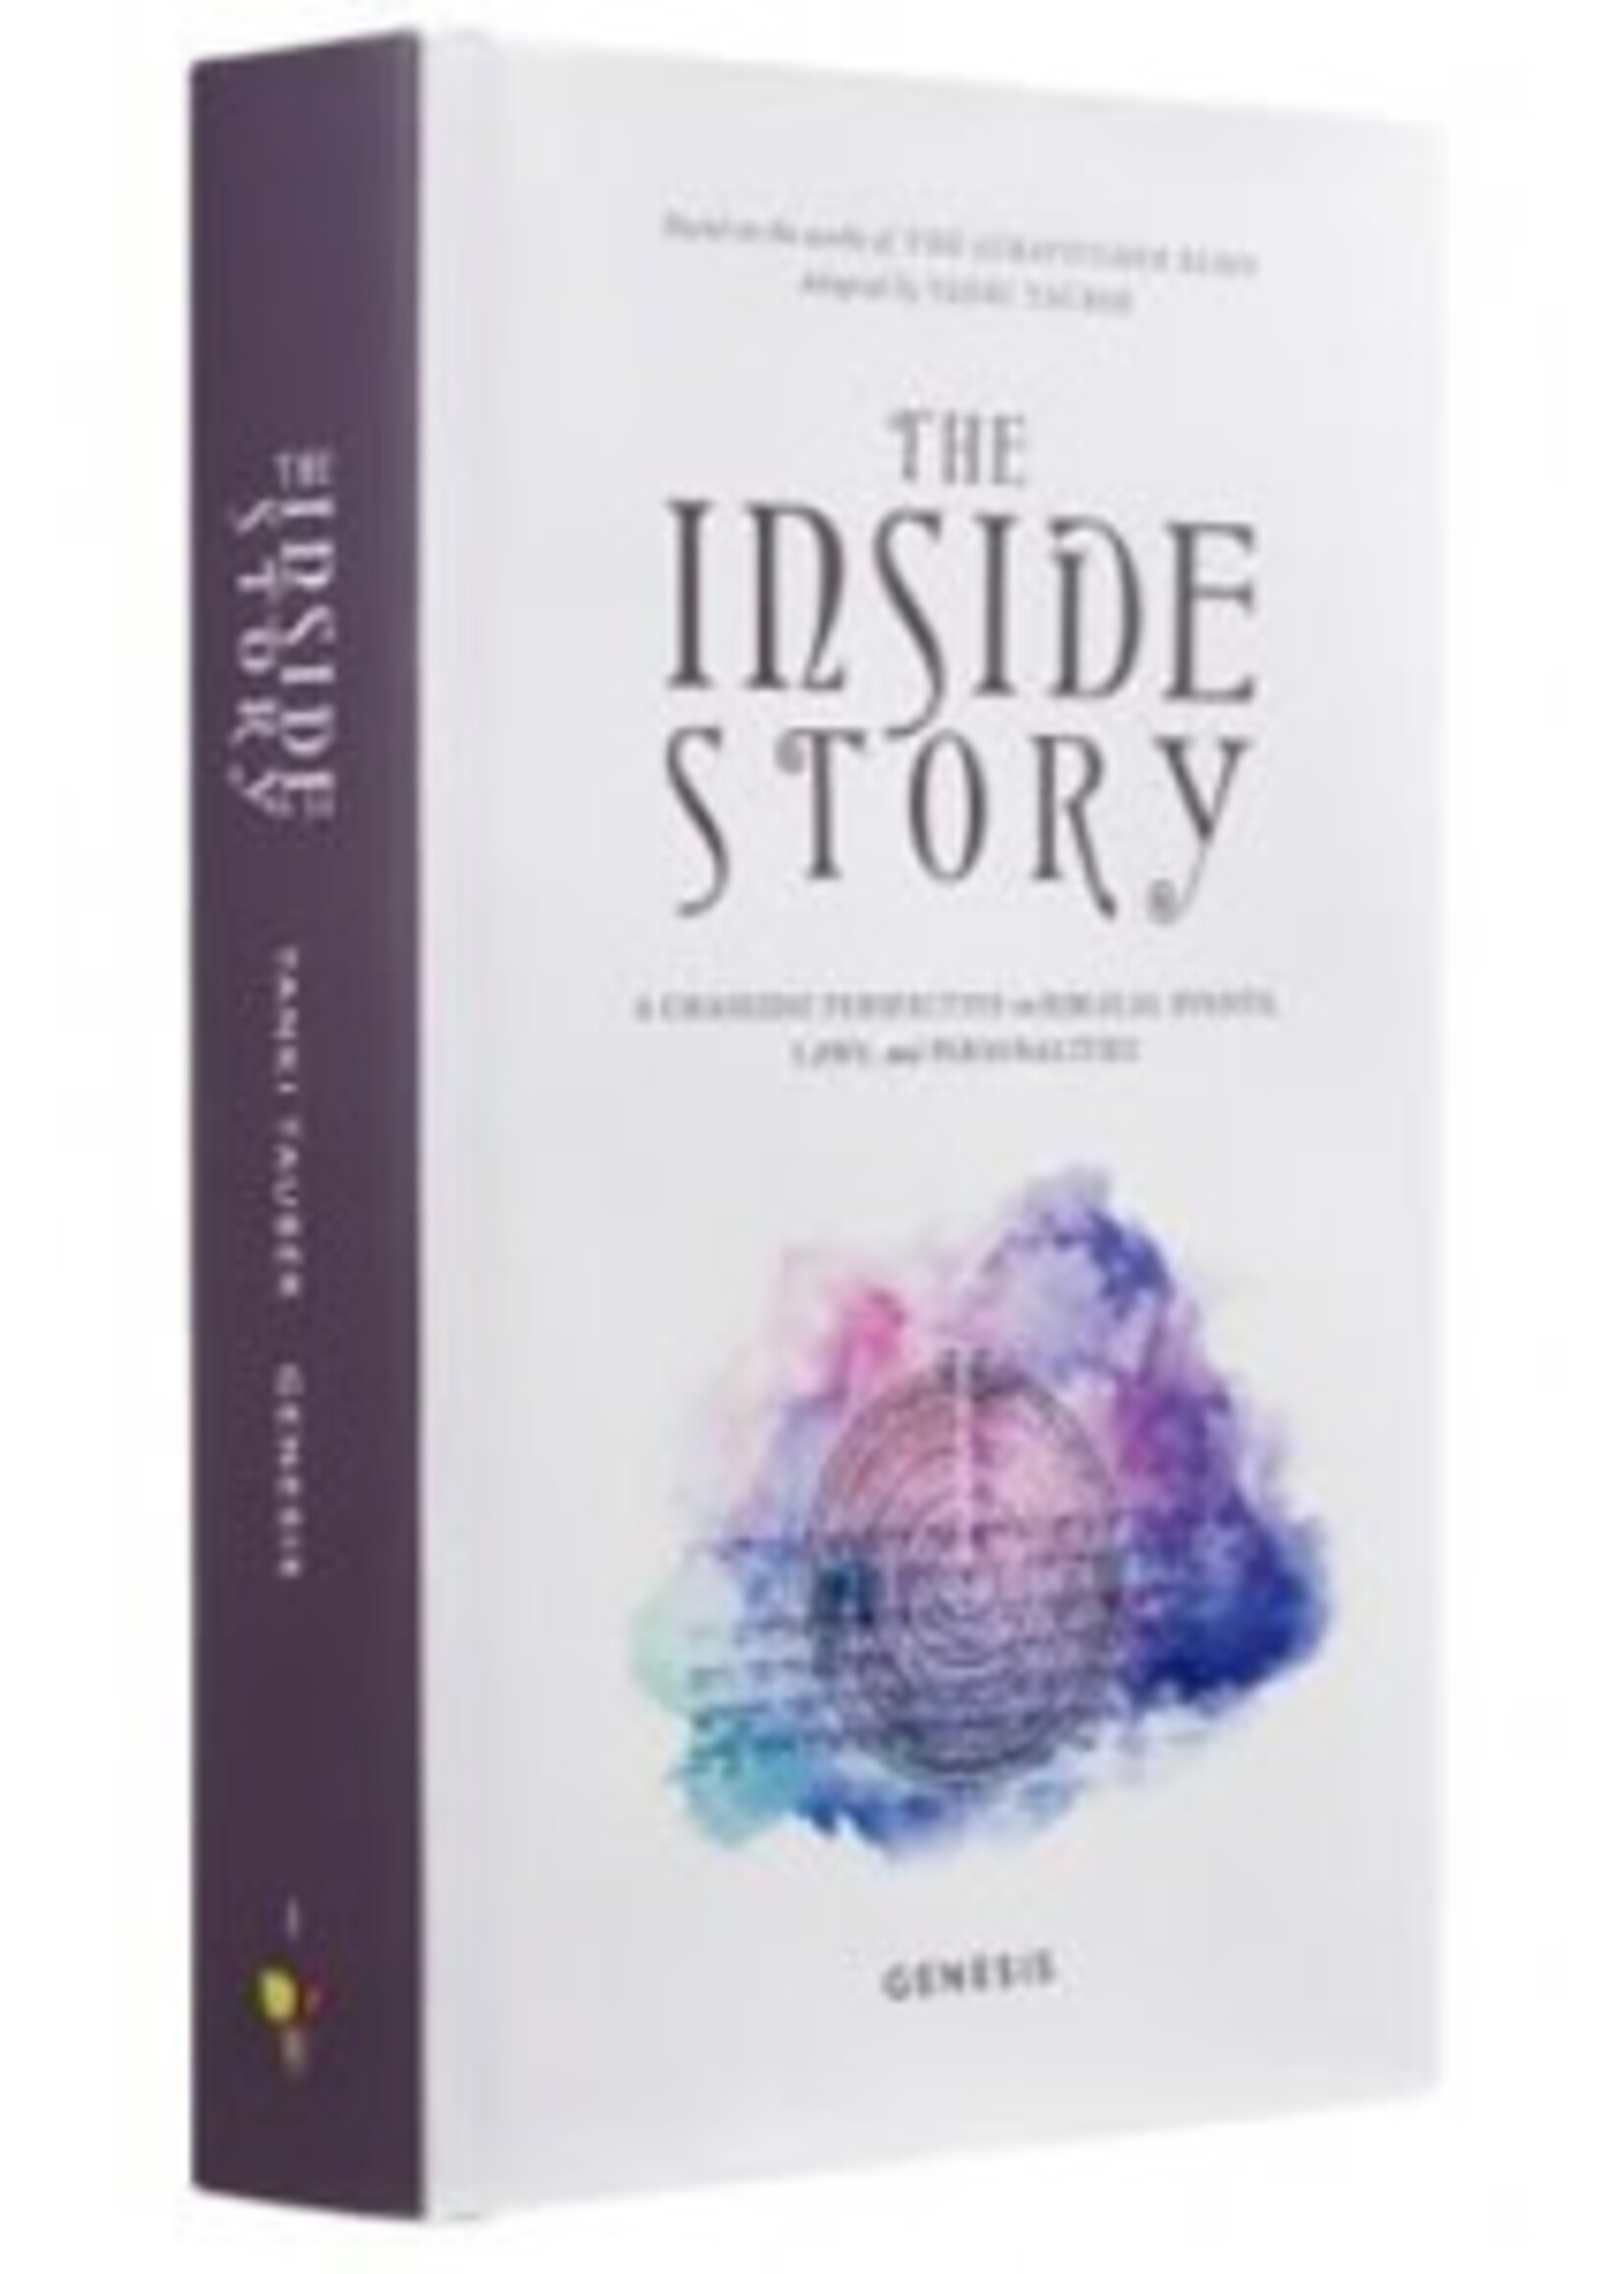 THE INSIDE STORY - GENESIS